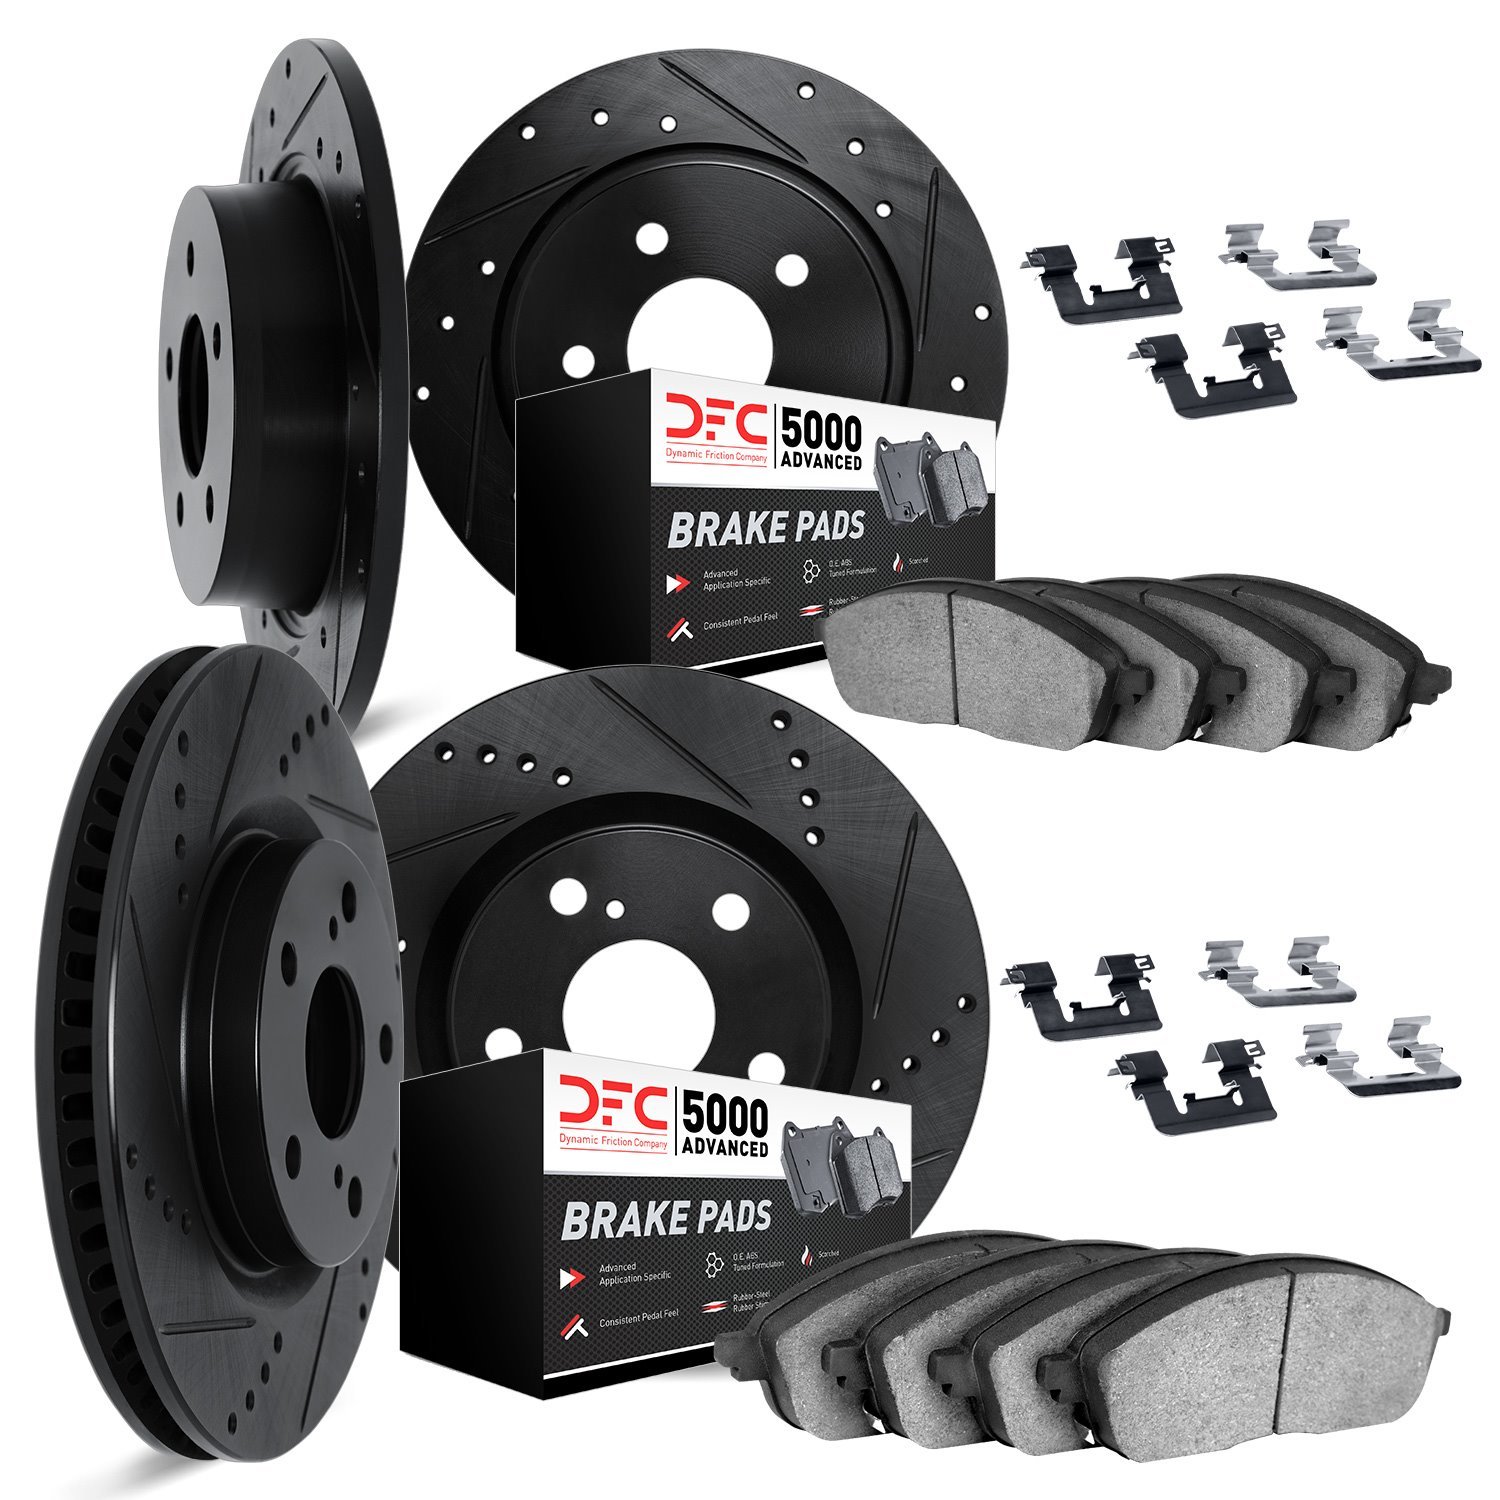 8514-03074 Drilled/Slotted Brake Rotors w/5000 Advanced Brake Pads Kit & Hardware [Black], Fits Select Kia/Hyundai/Genesis, Posi